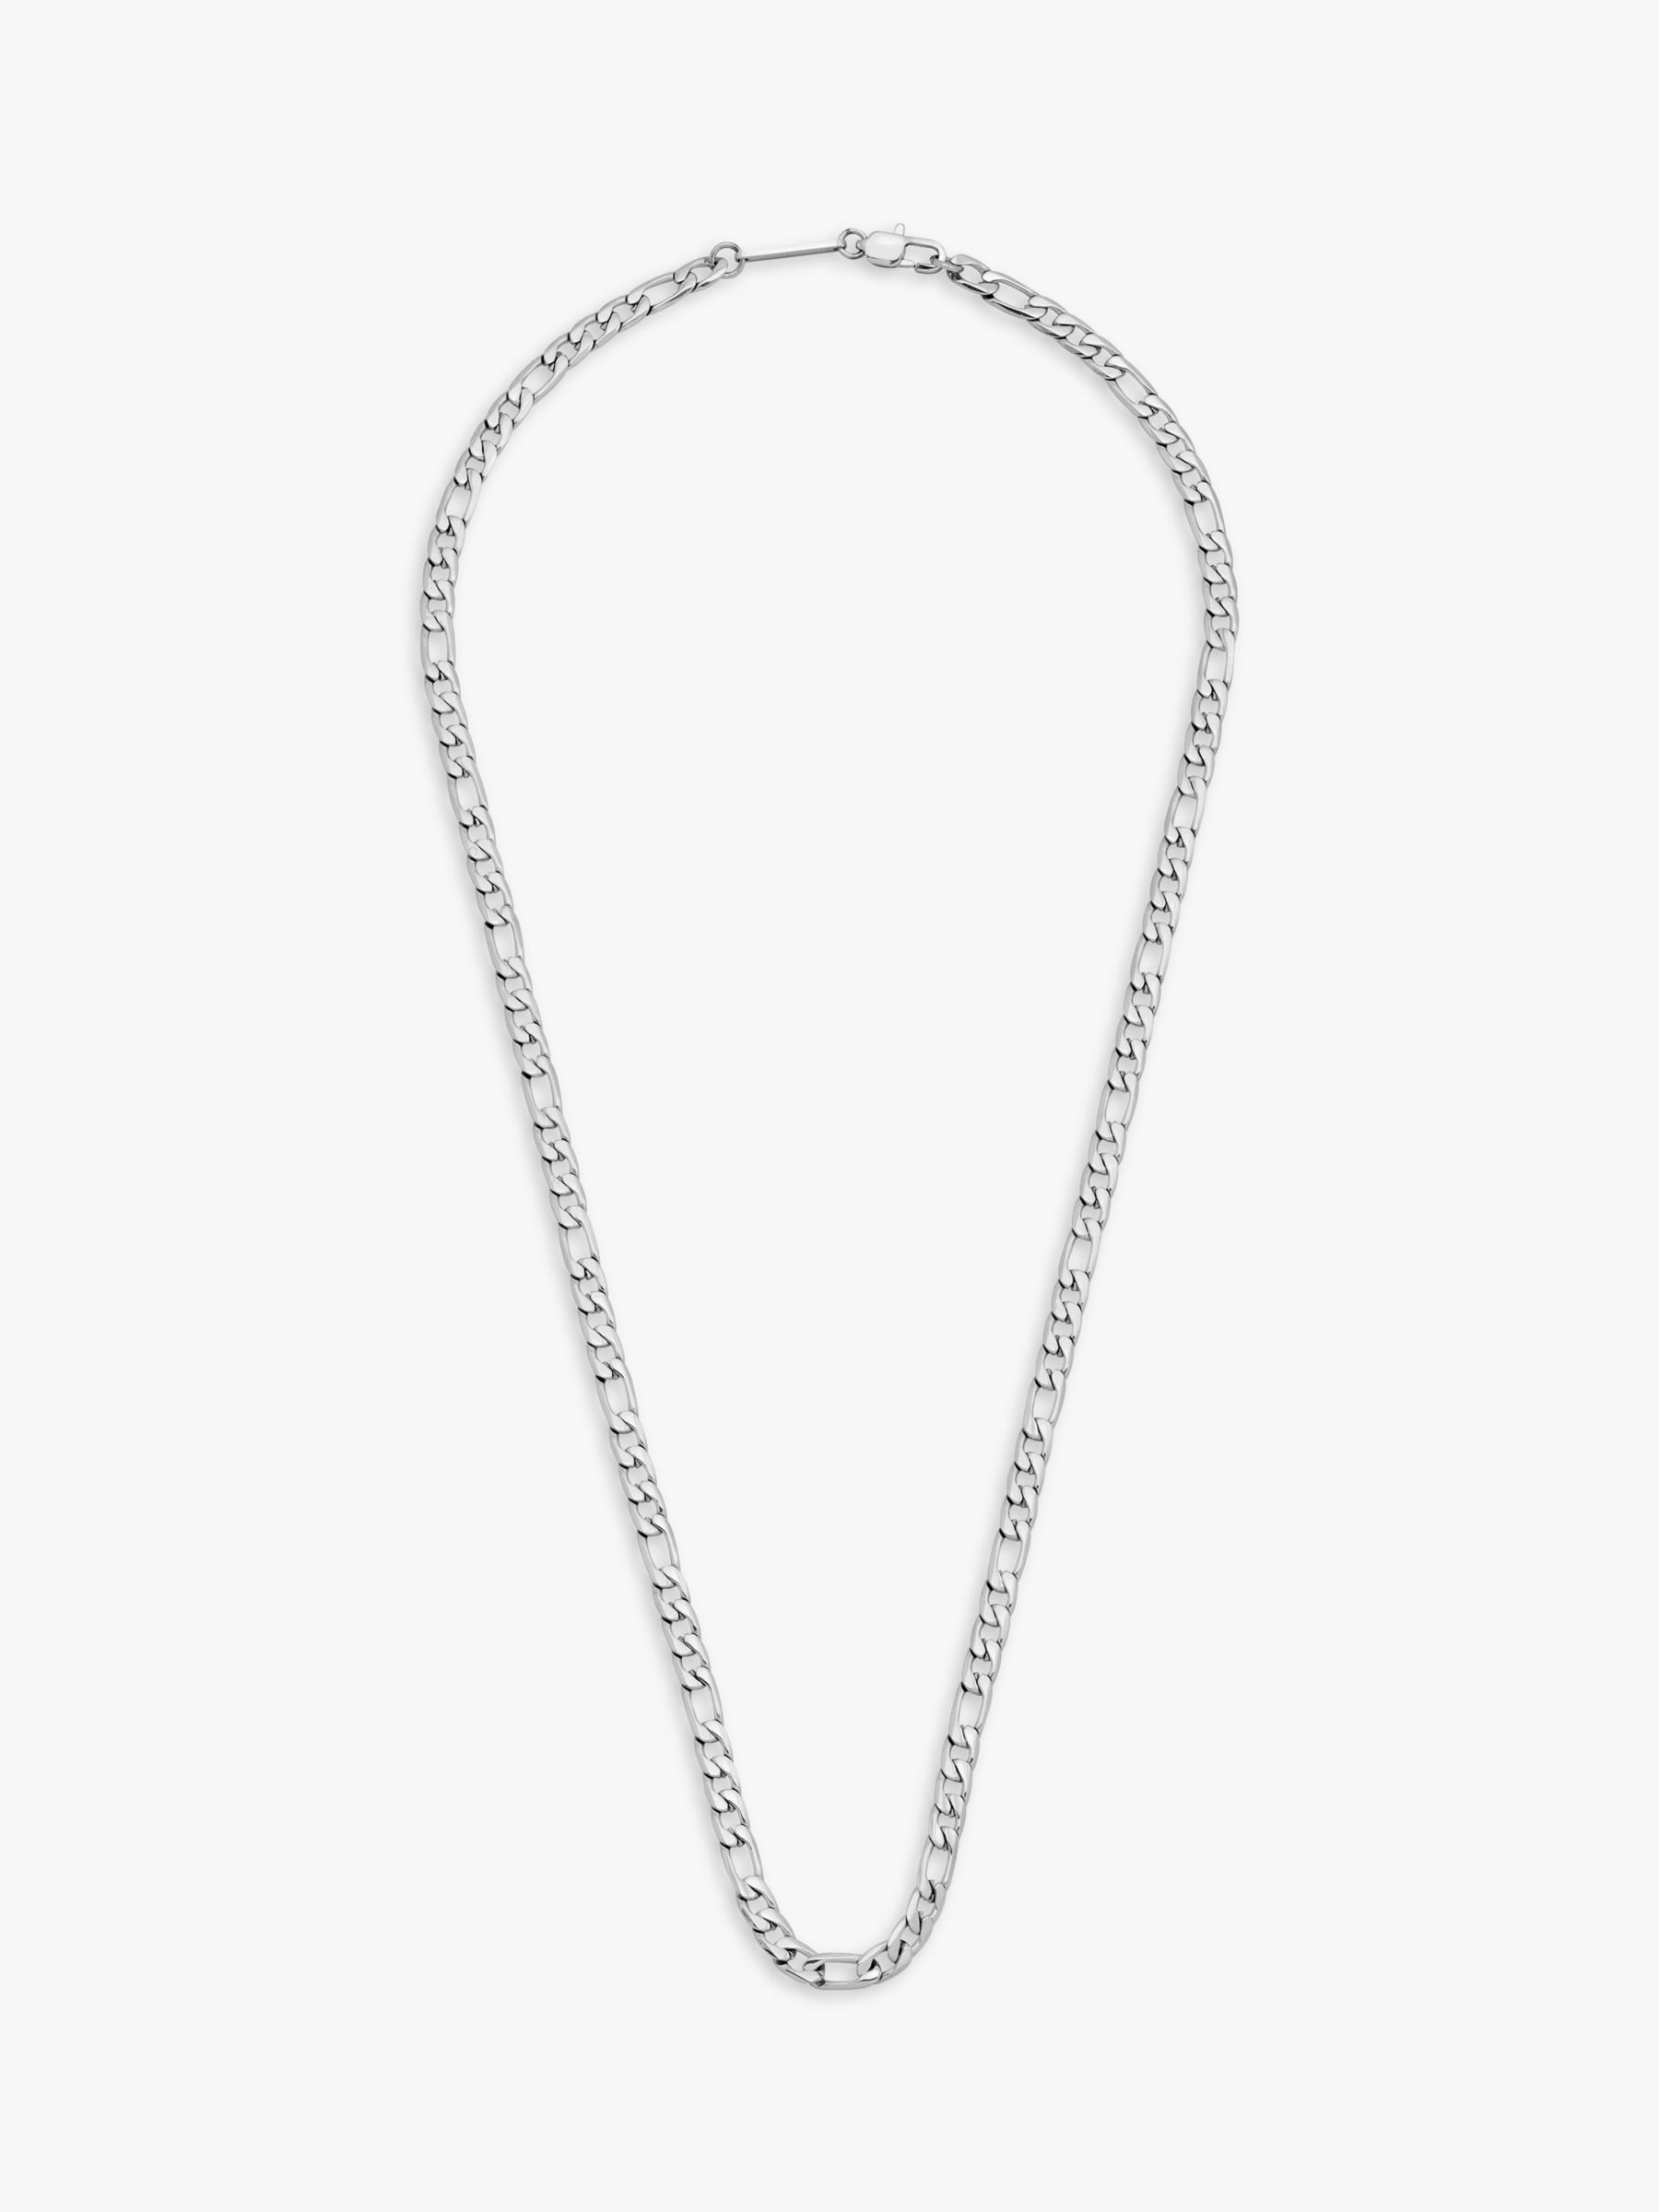 BARTLETT LONDON Men's Figaro Chain Necklace, Silver